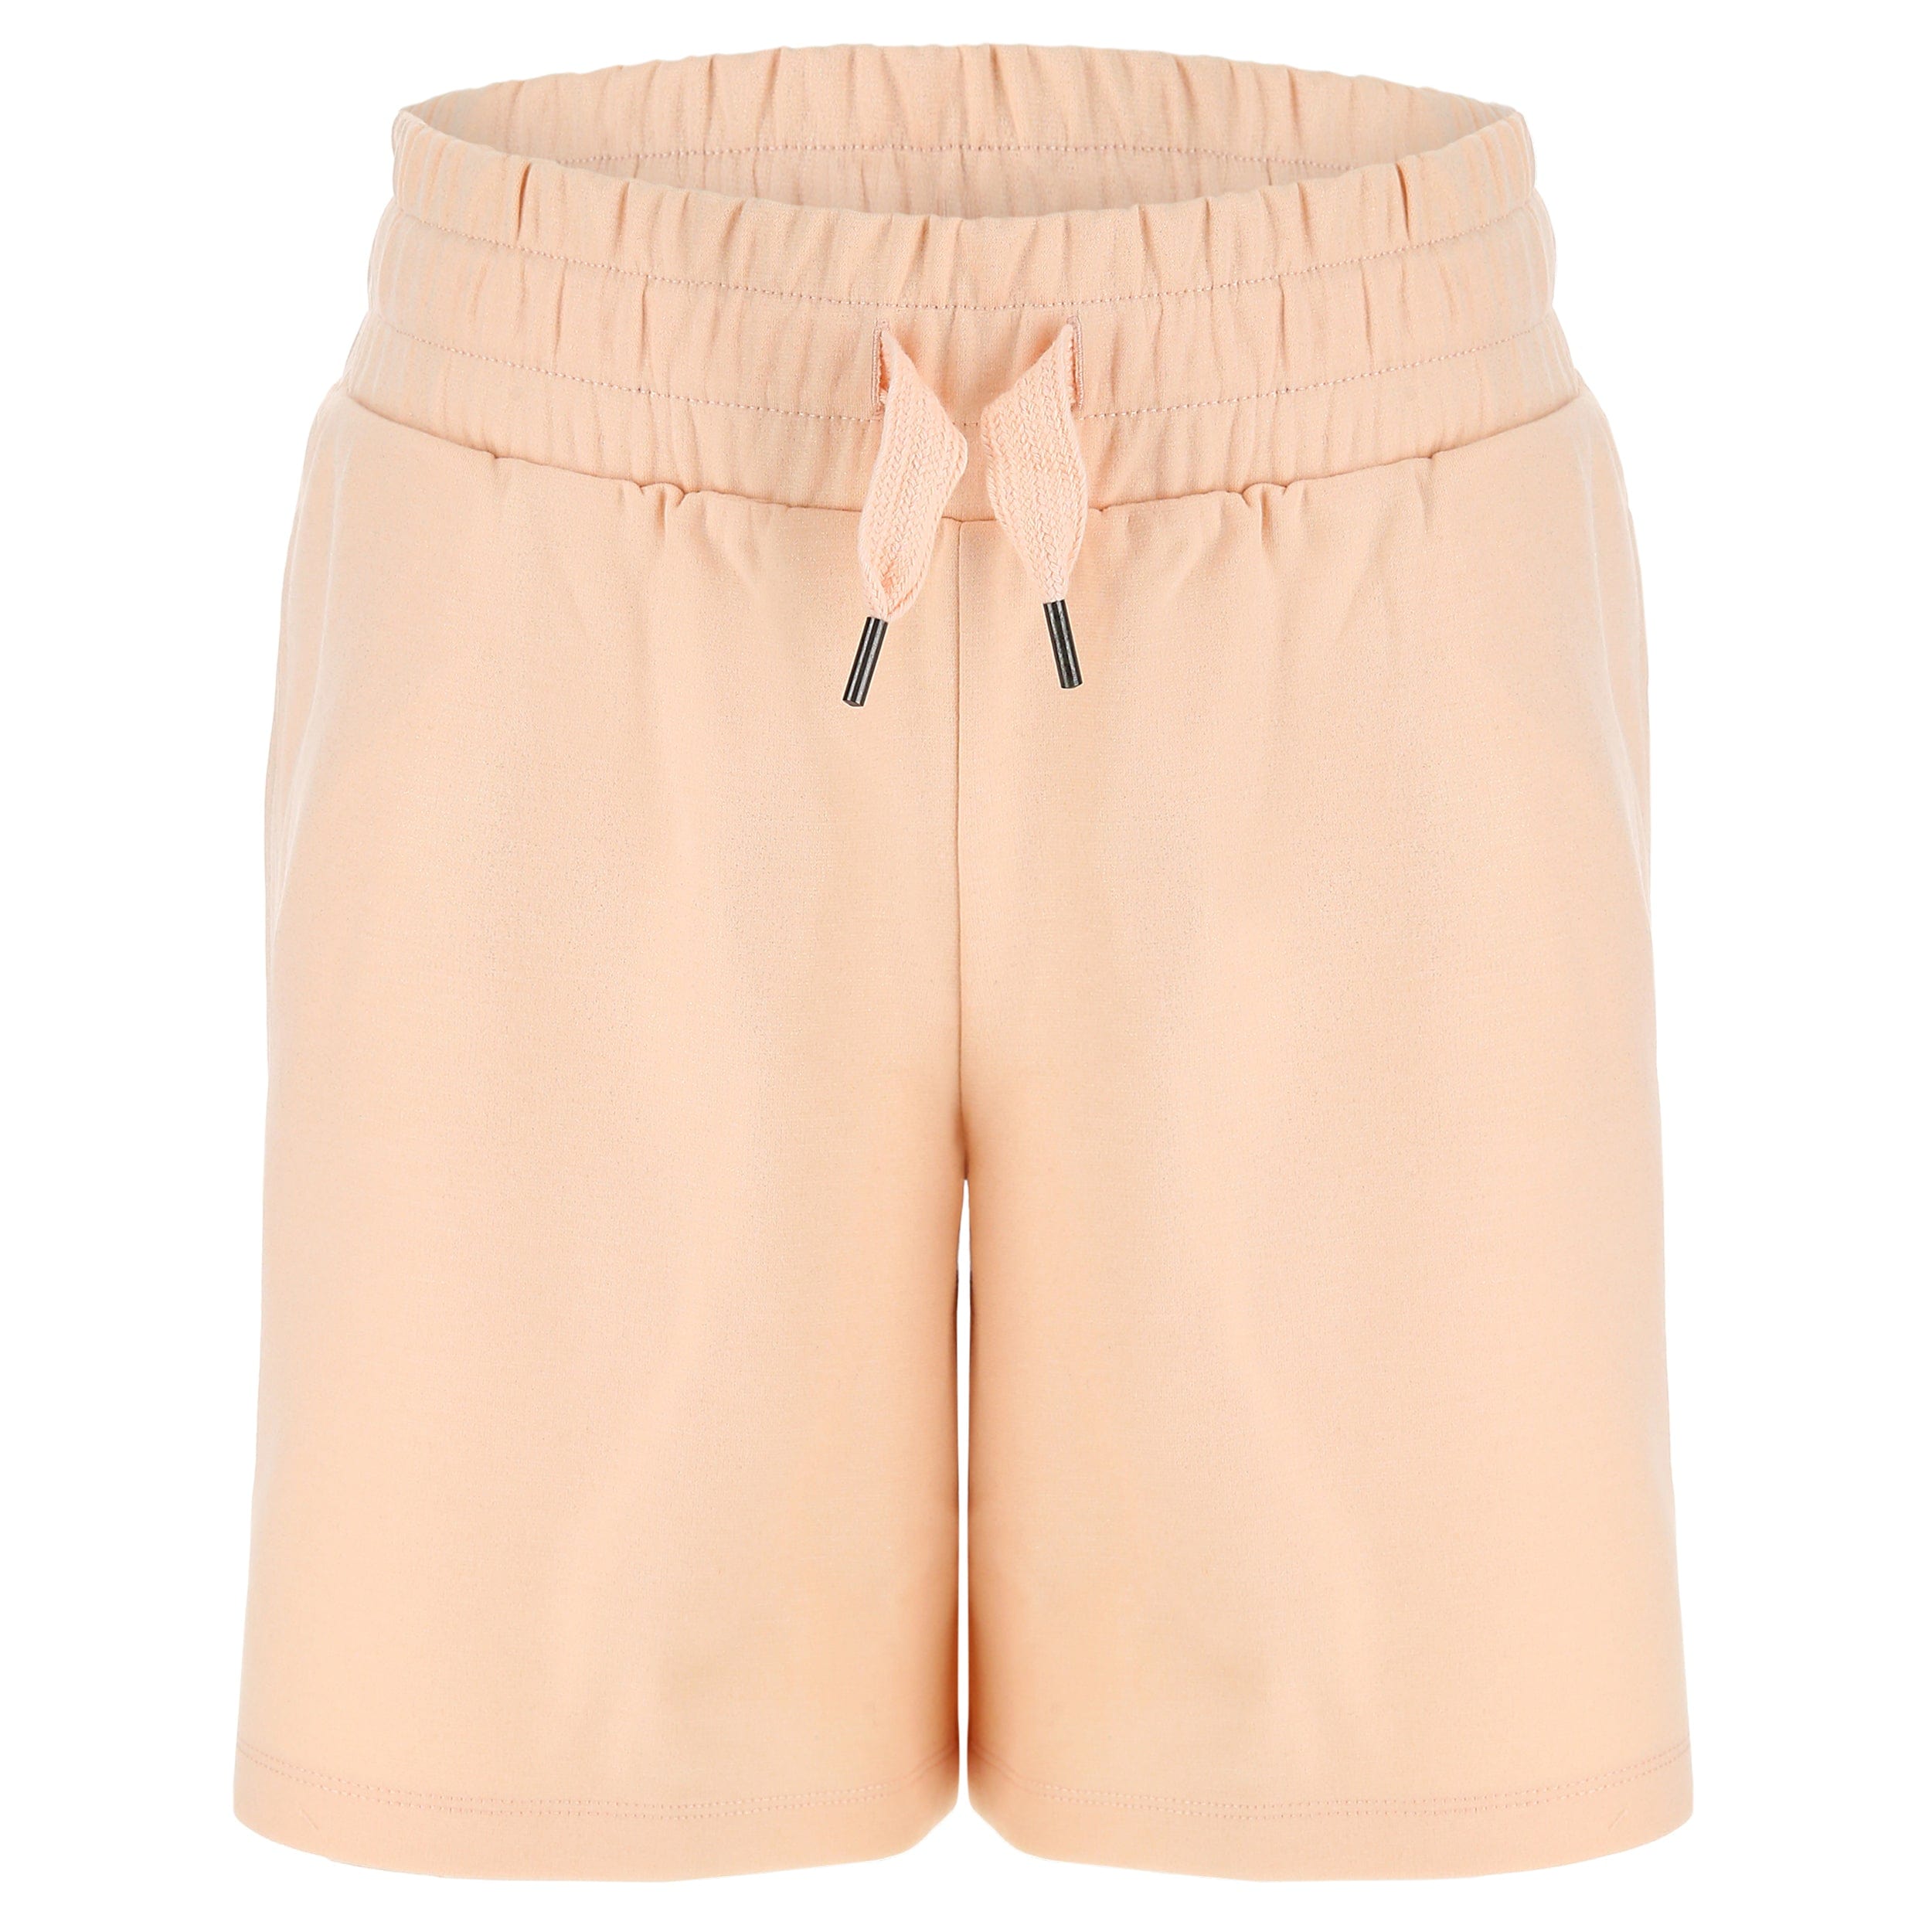 Bermuda shorts - Beige 1